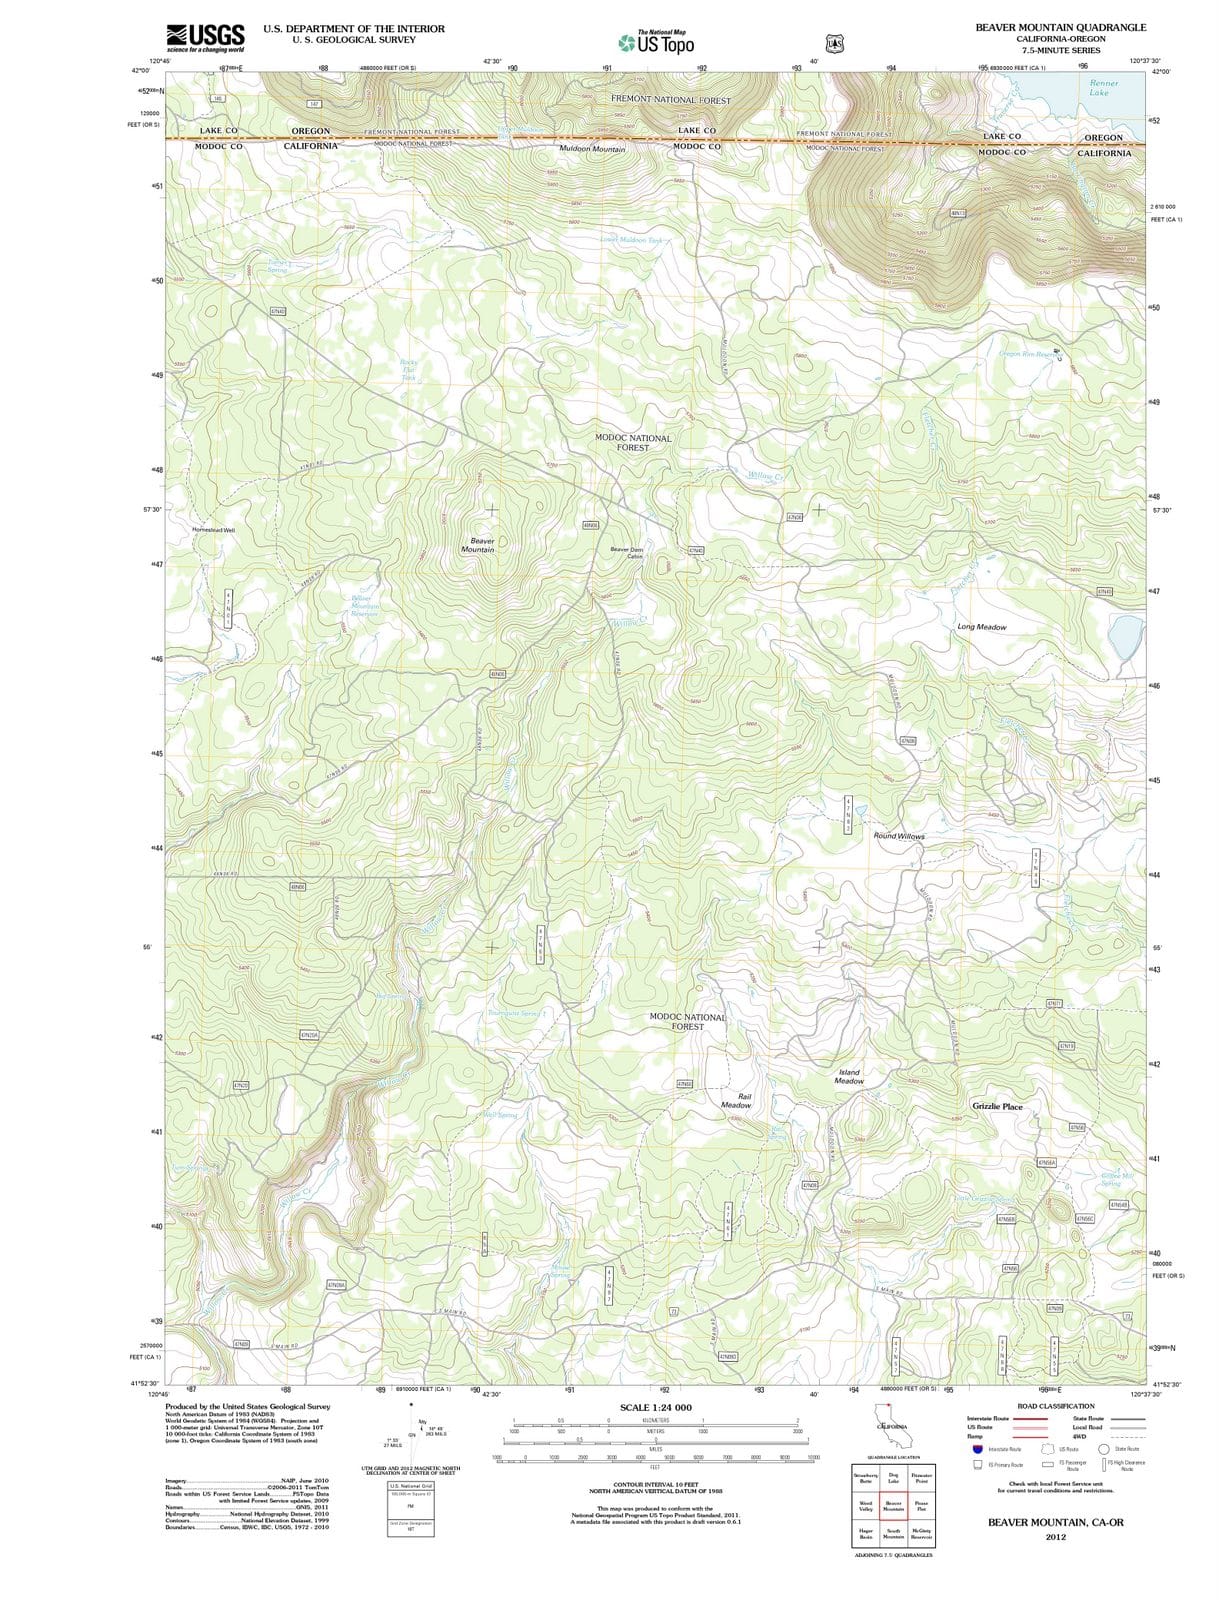 2012 Beaver Mountain, CA - California - USGS Topographic Map